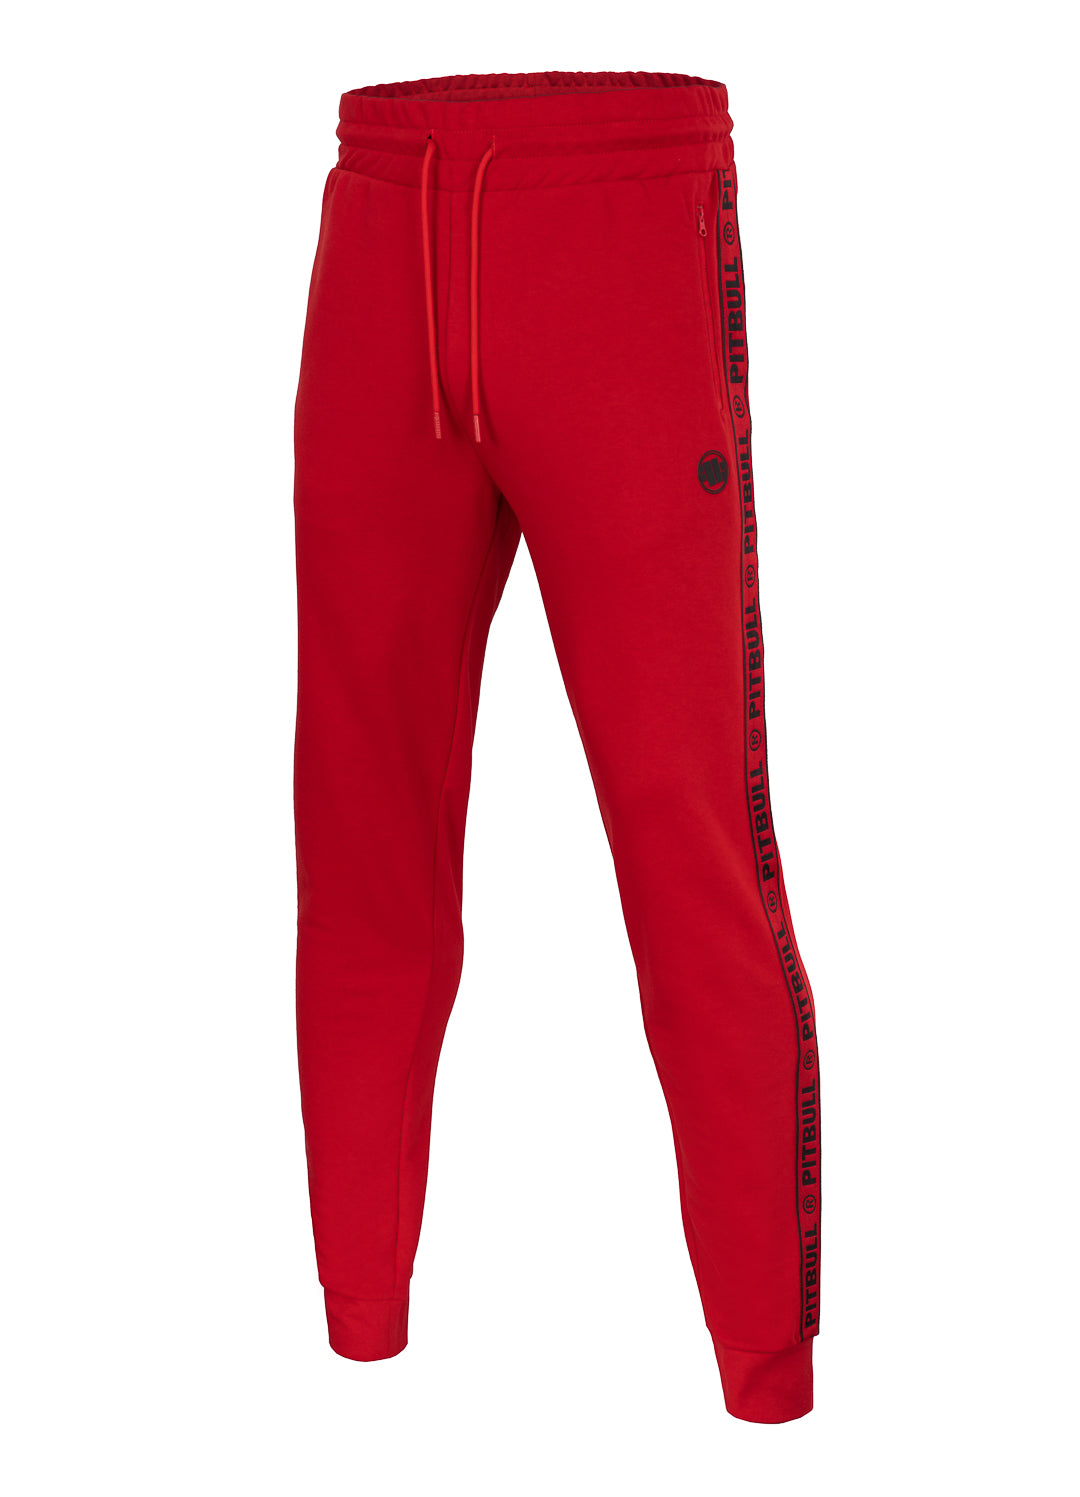 Jogging Pants MERIDAN Red - Pitbull West Coast International Store 